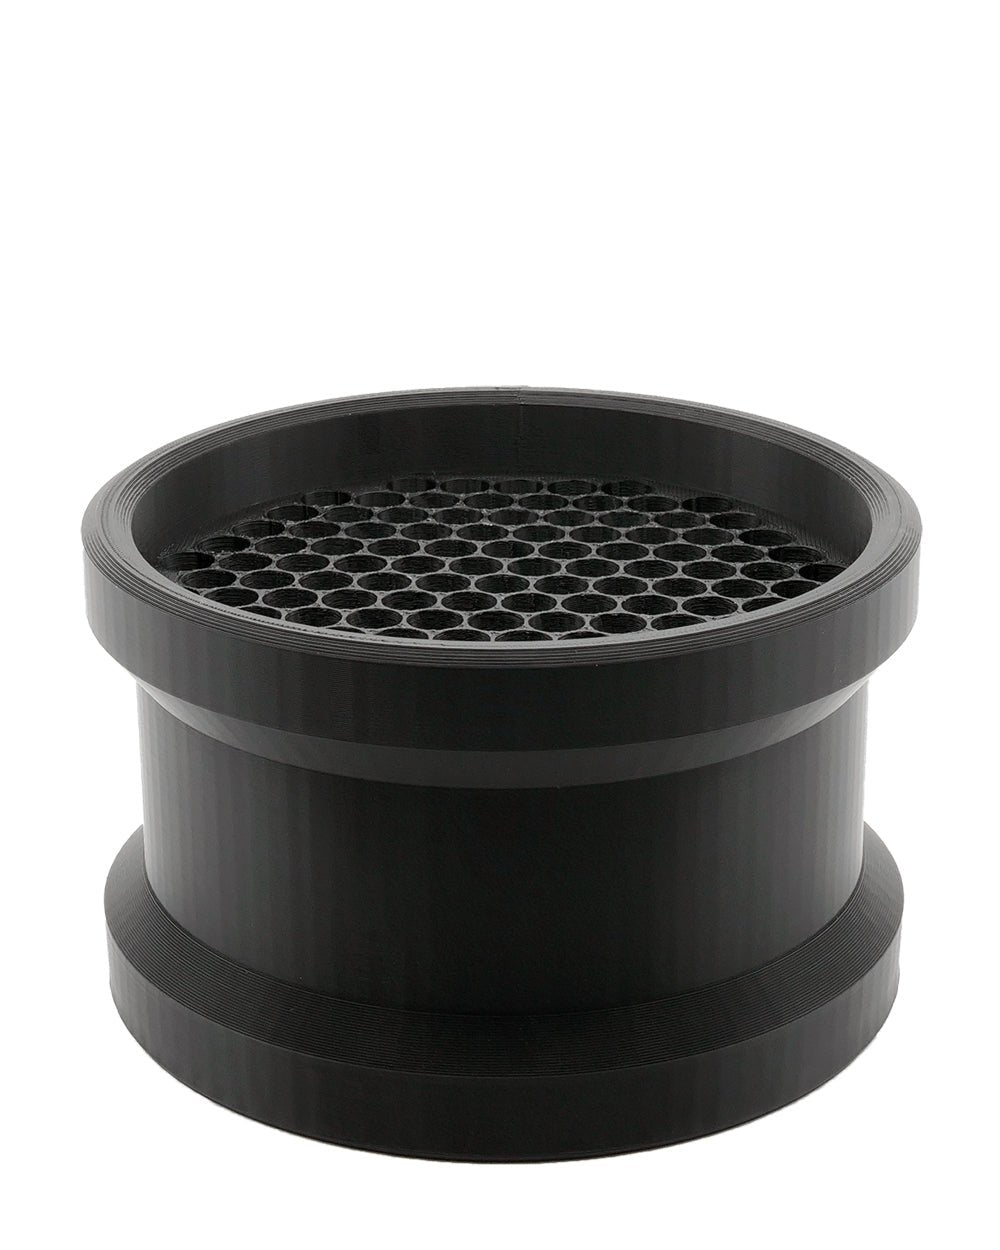 HUMBOLDT | Black Pre-Rolled Cones Filling Machine Starter Kit 84mm | Fill 121 Cones Per Run - 3